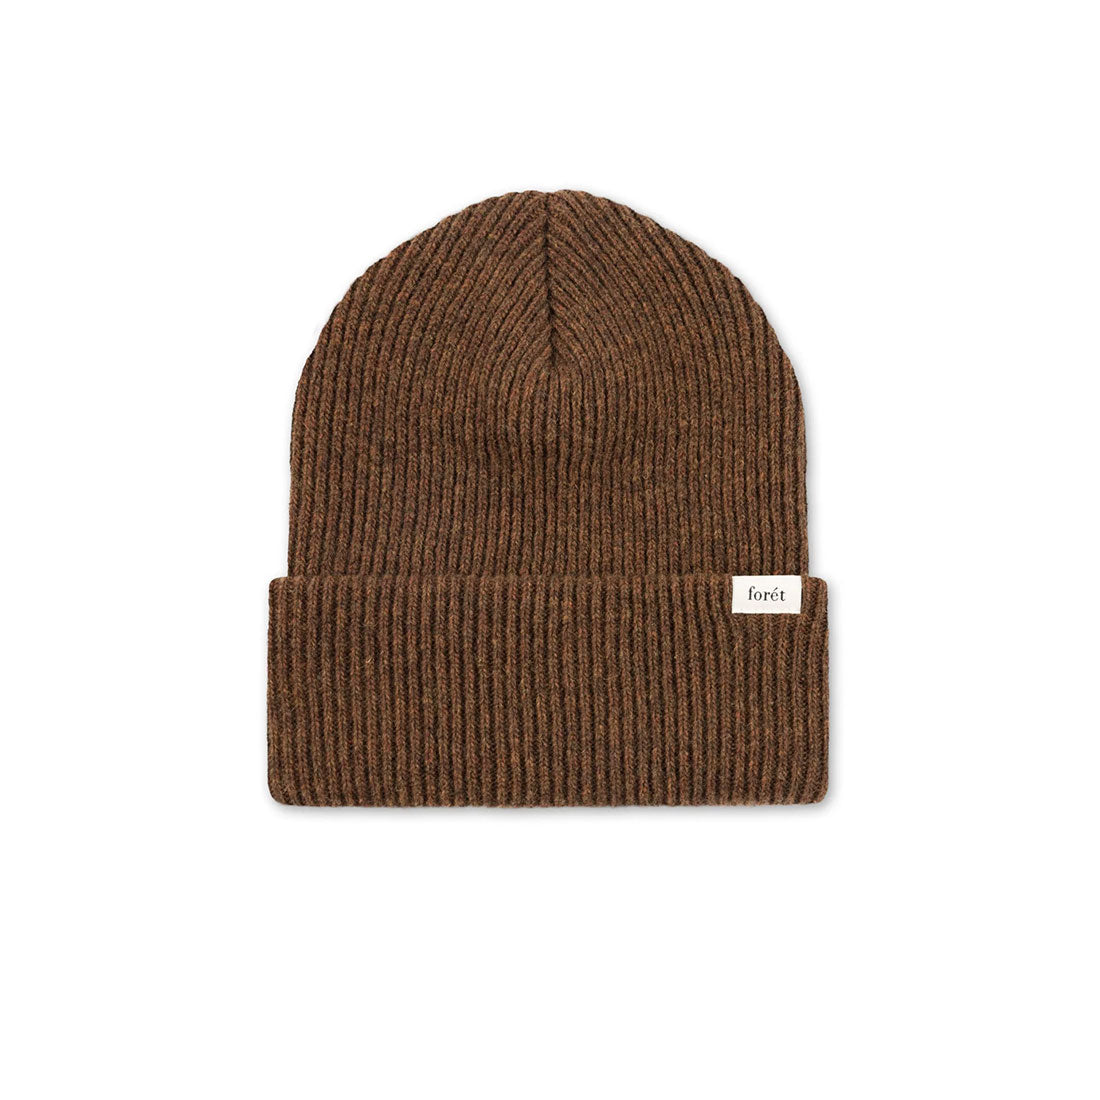 Forét winter hat - Forest Beanie-Brown